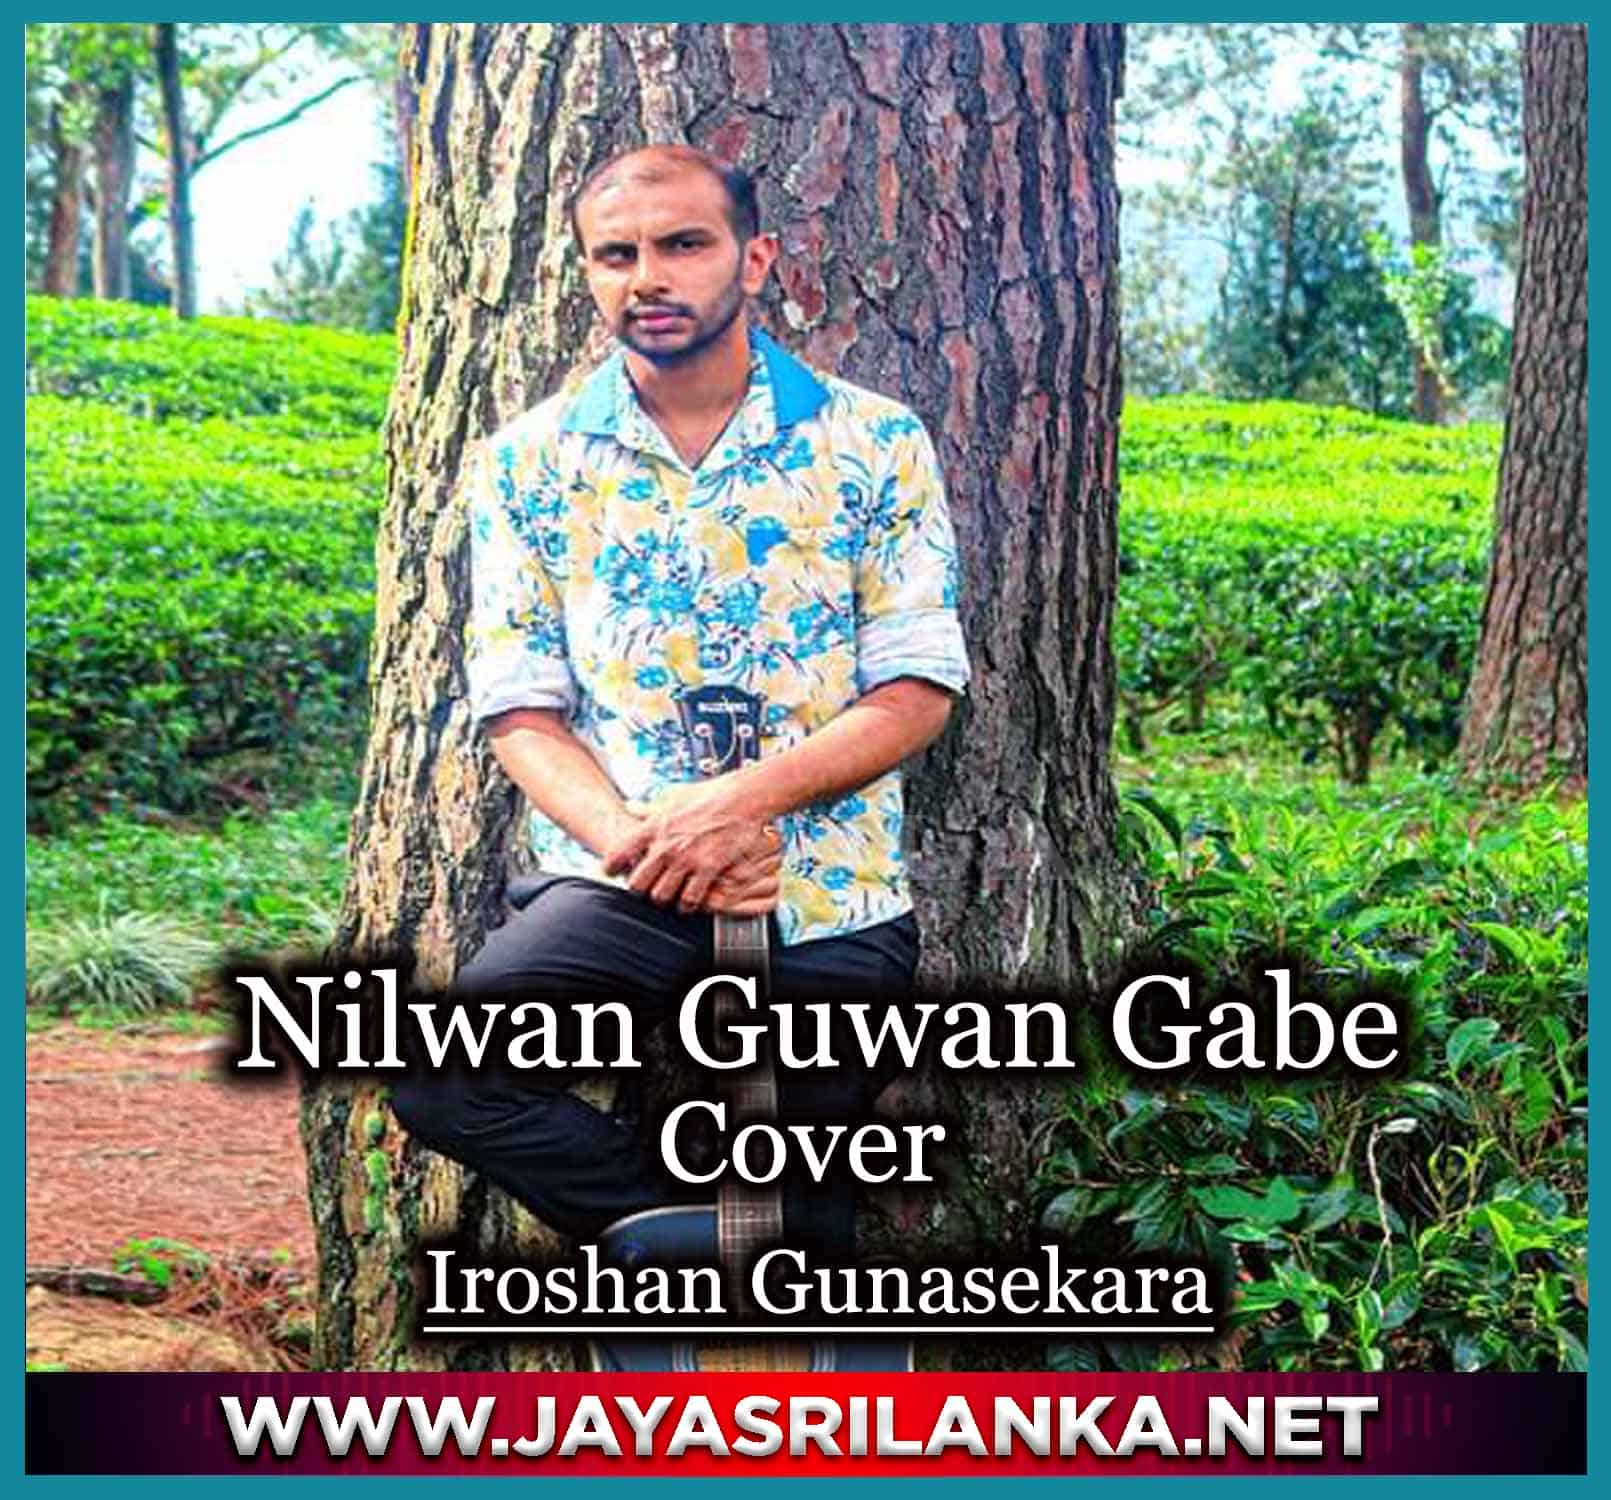 Nilwan Guwan Gabe Cover